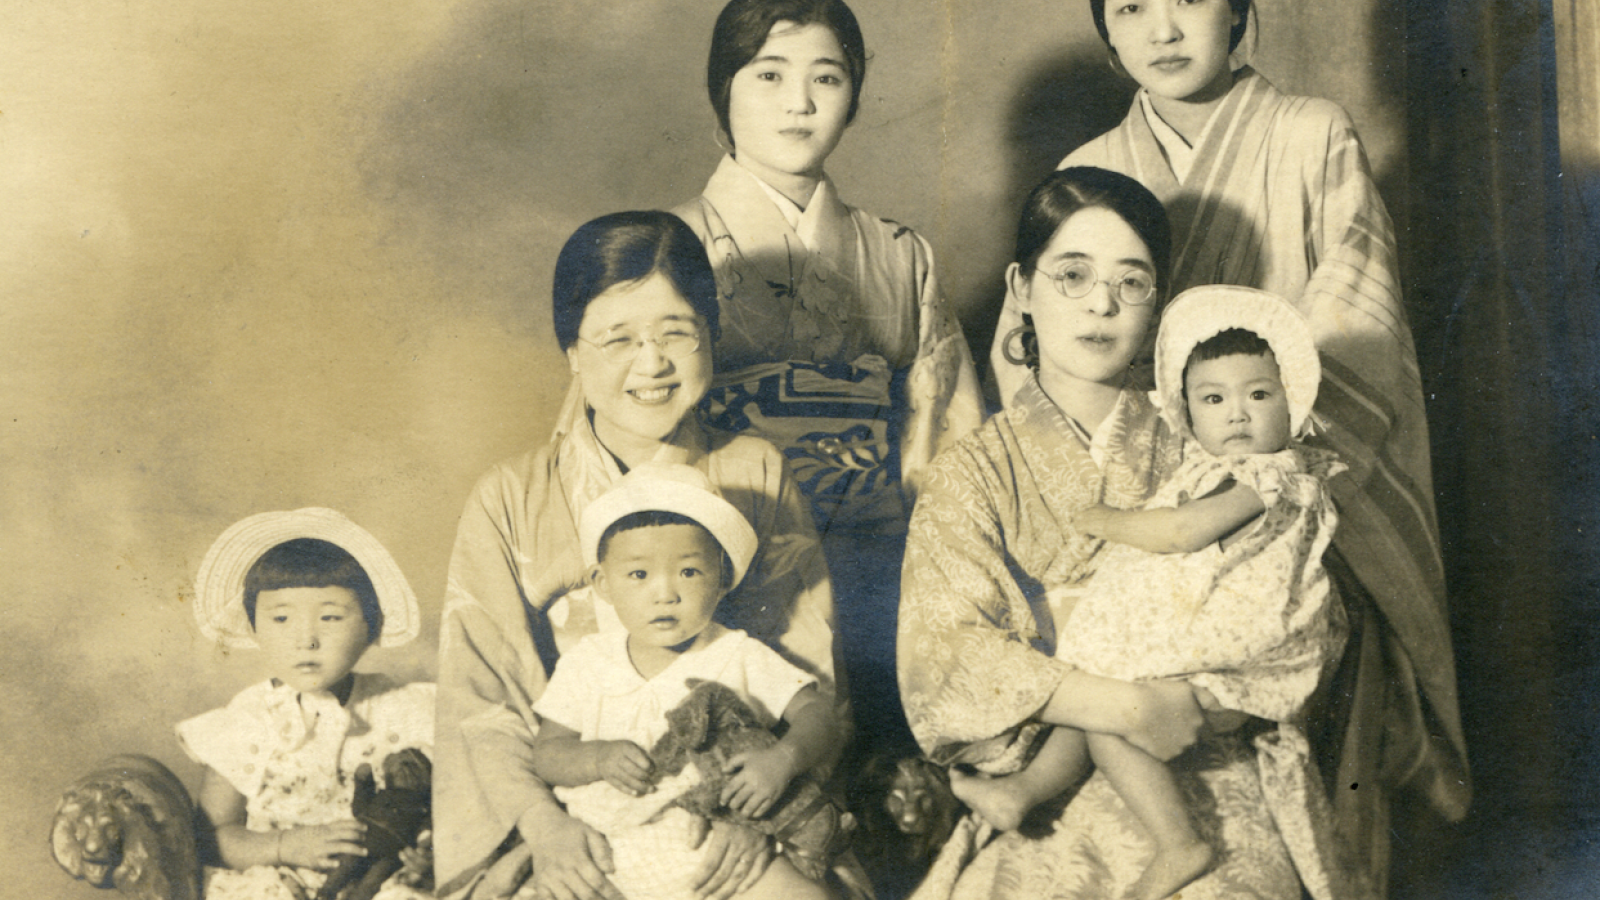 Black and white photo of Sakaoka as baby with family